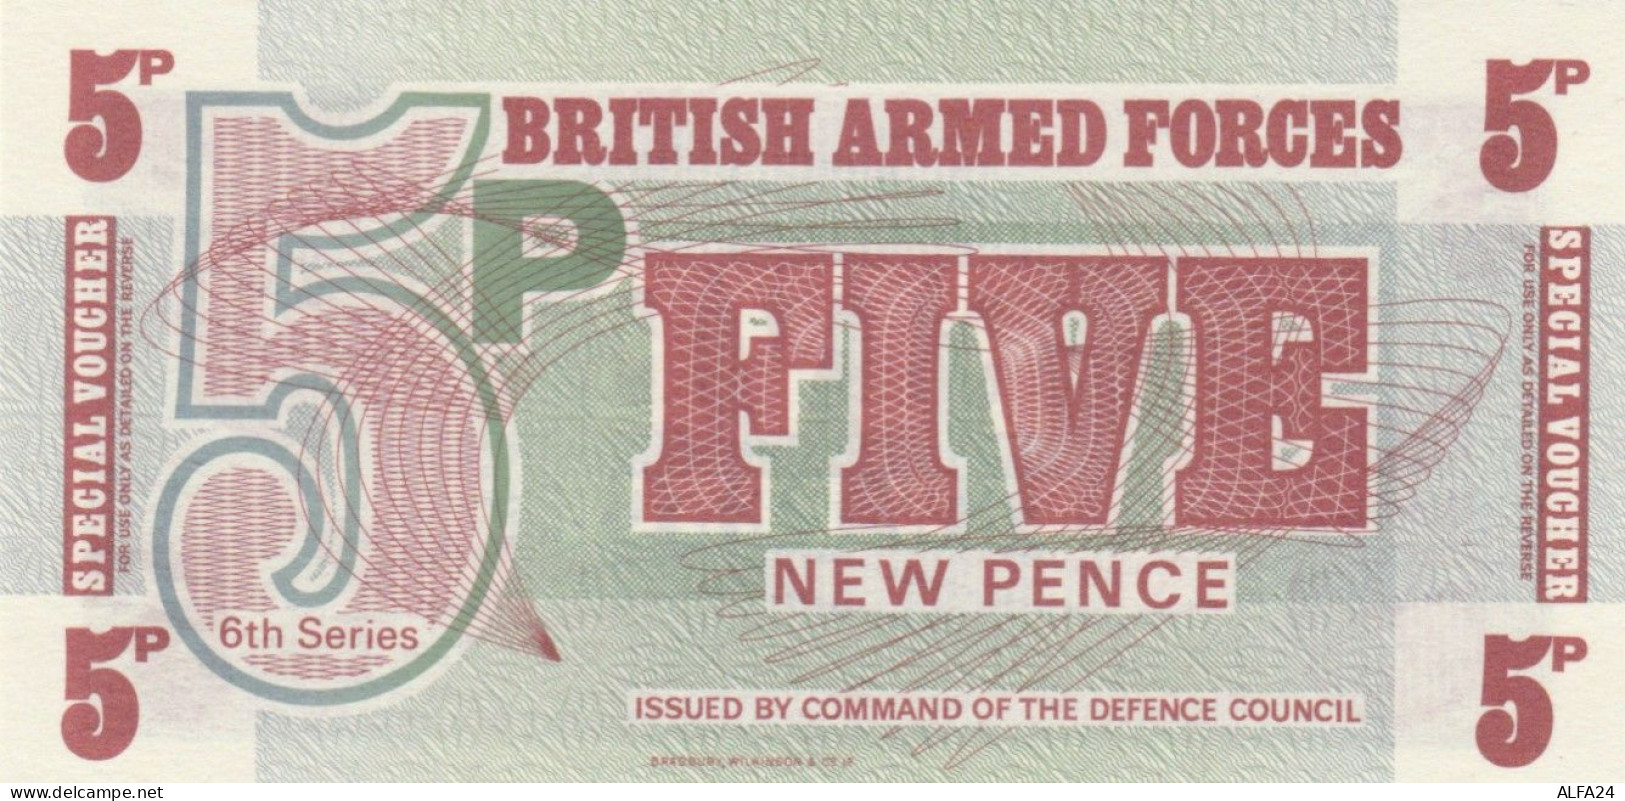 BANCONOTA BRITISH ARMED FORCE 5 UNC (MK731 - British Troepen & Speciale Documenten